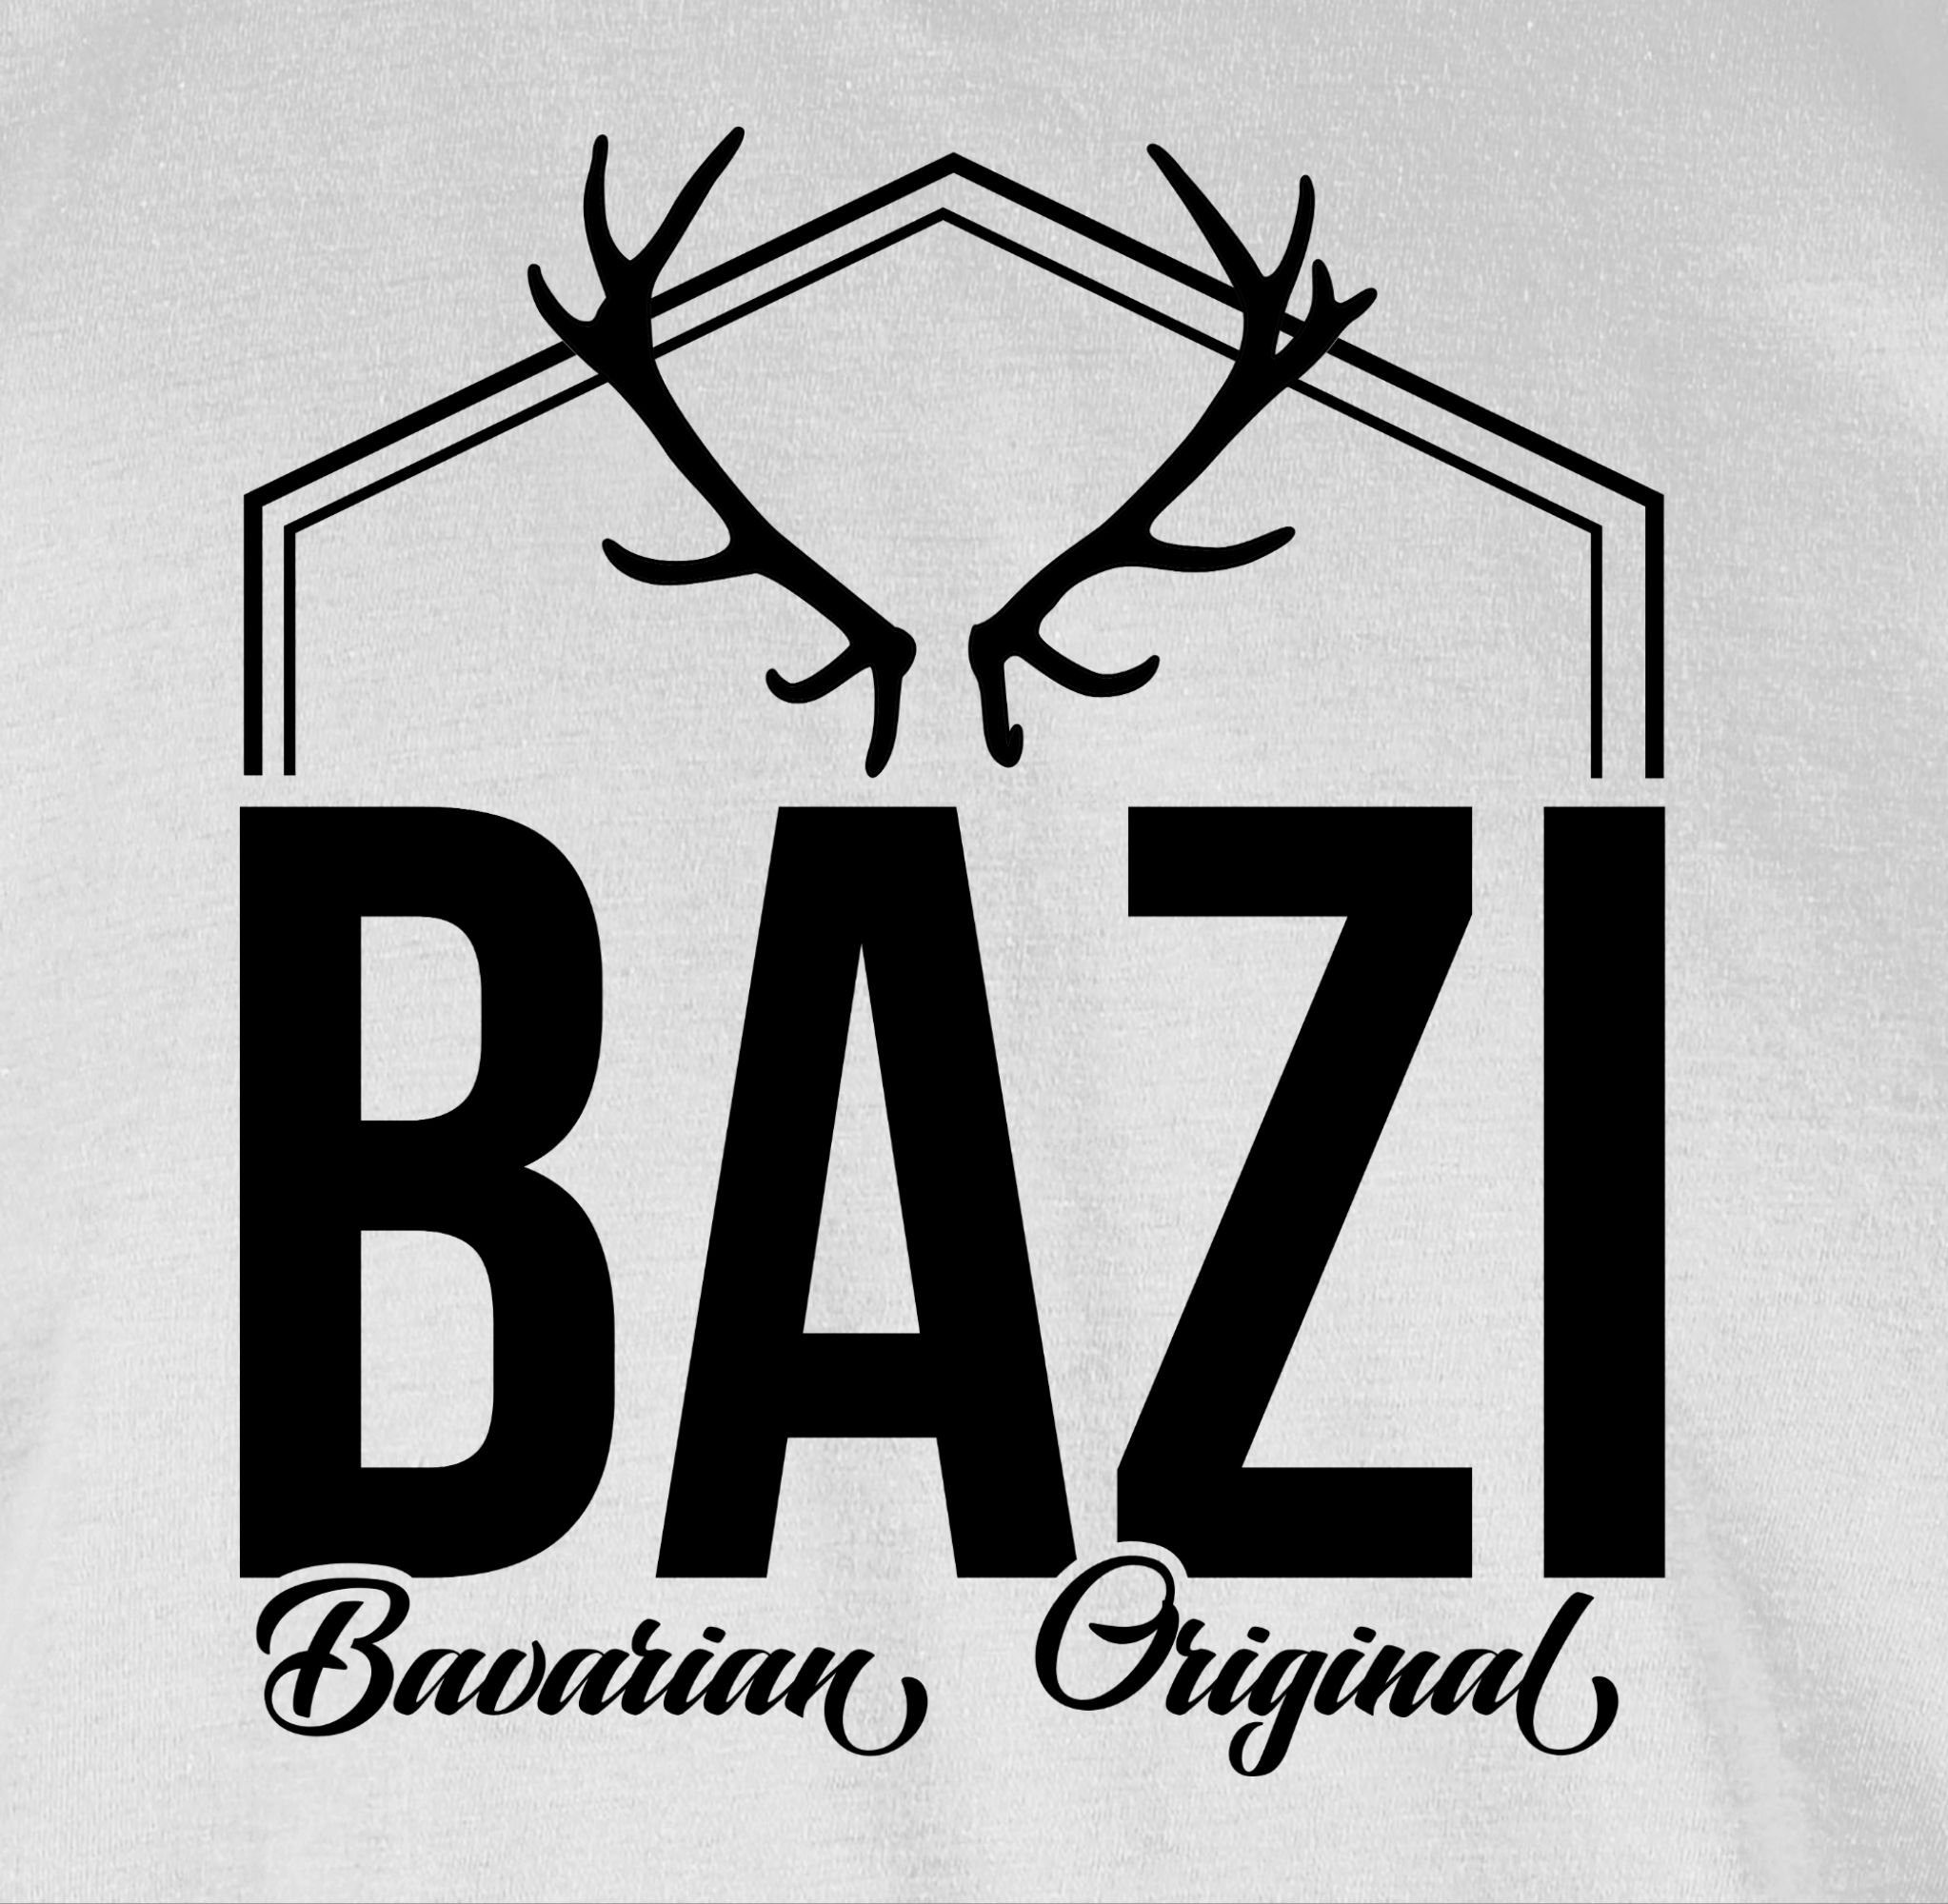 Bazi 3 - Bayern Bavarian Männer Shirtracer Weiß T-Shirt Original